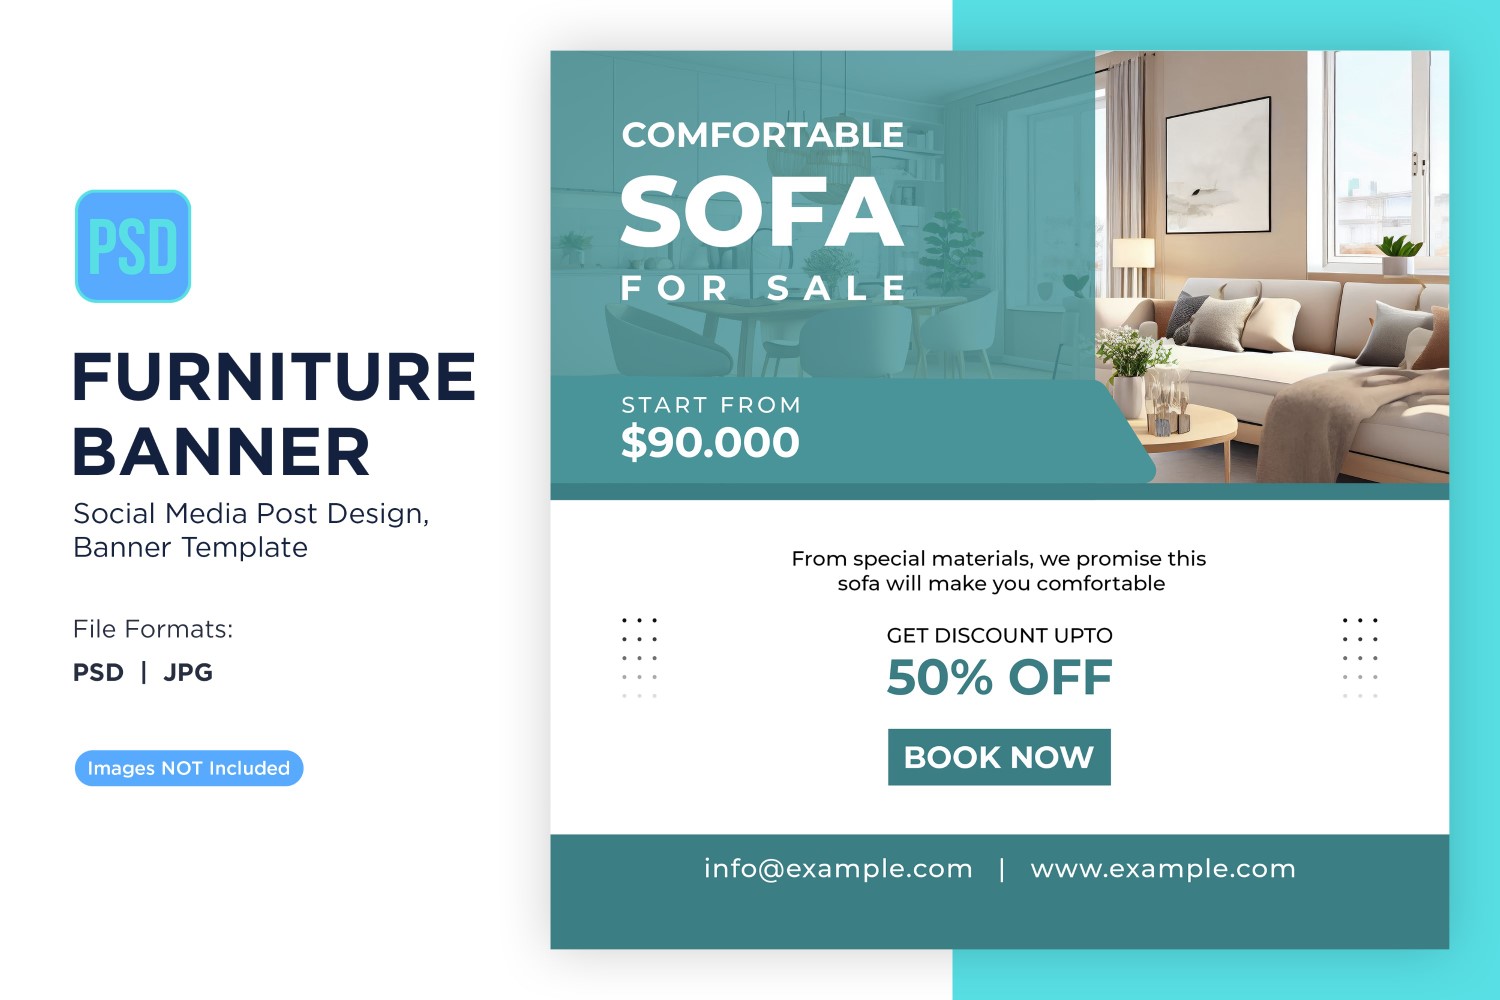 Comfortable Sofa For Sale Furniture Banner Design Template